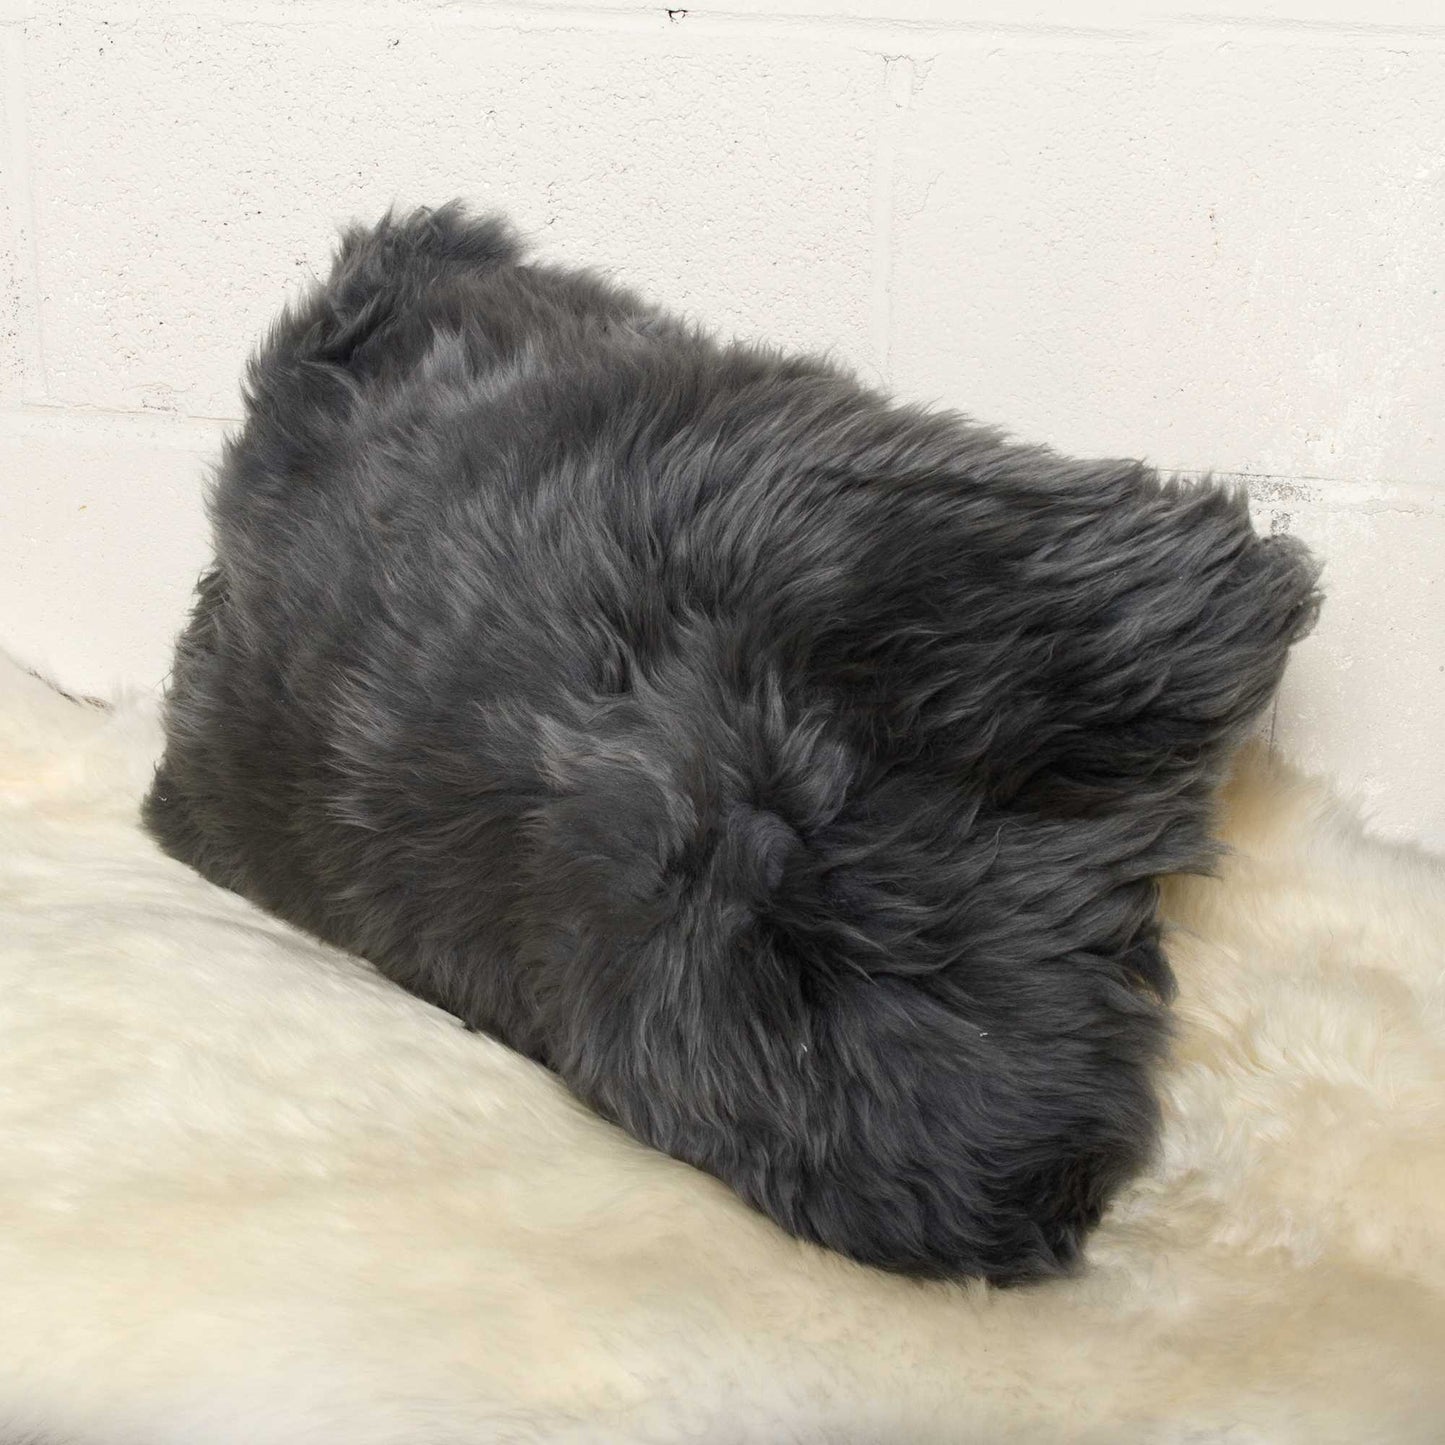 12" X 20" X 5" Gray Sheepskin  Pillow